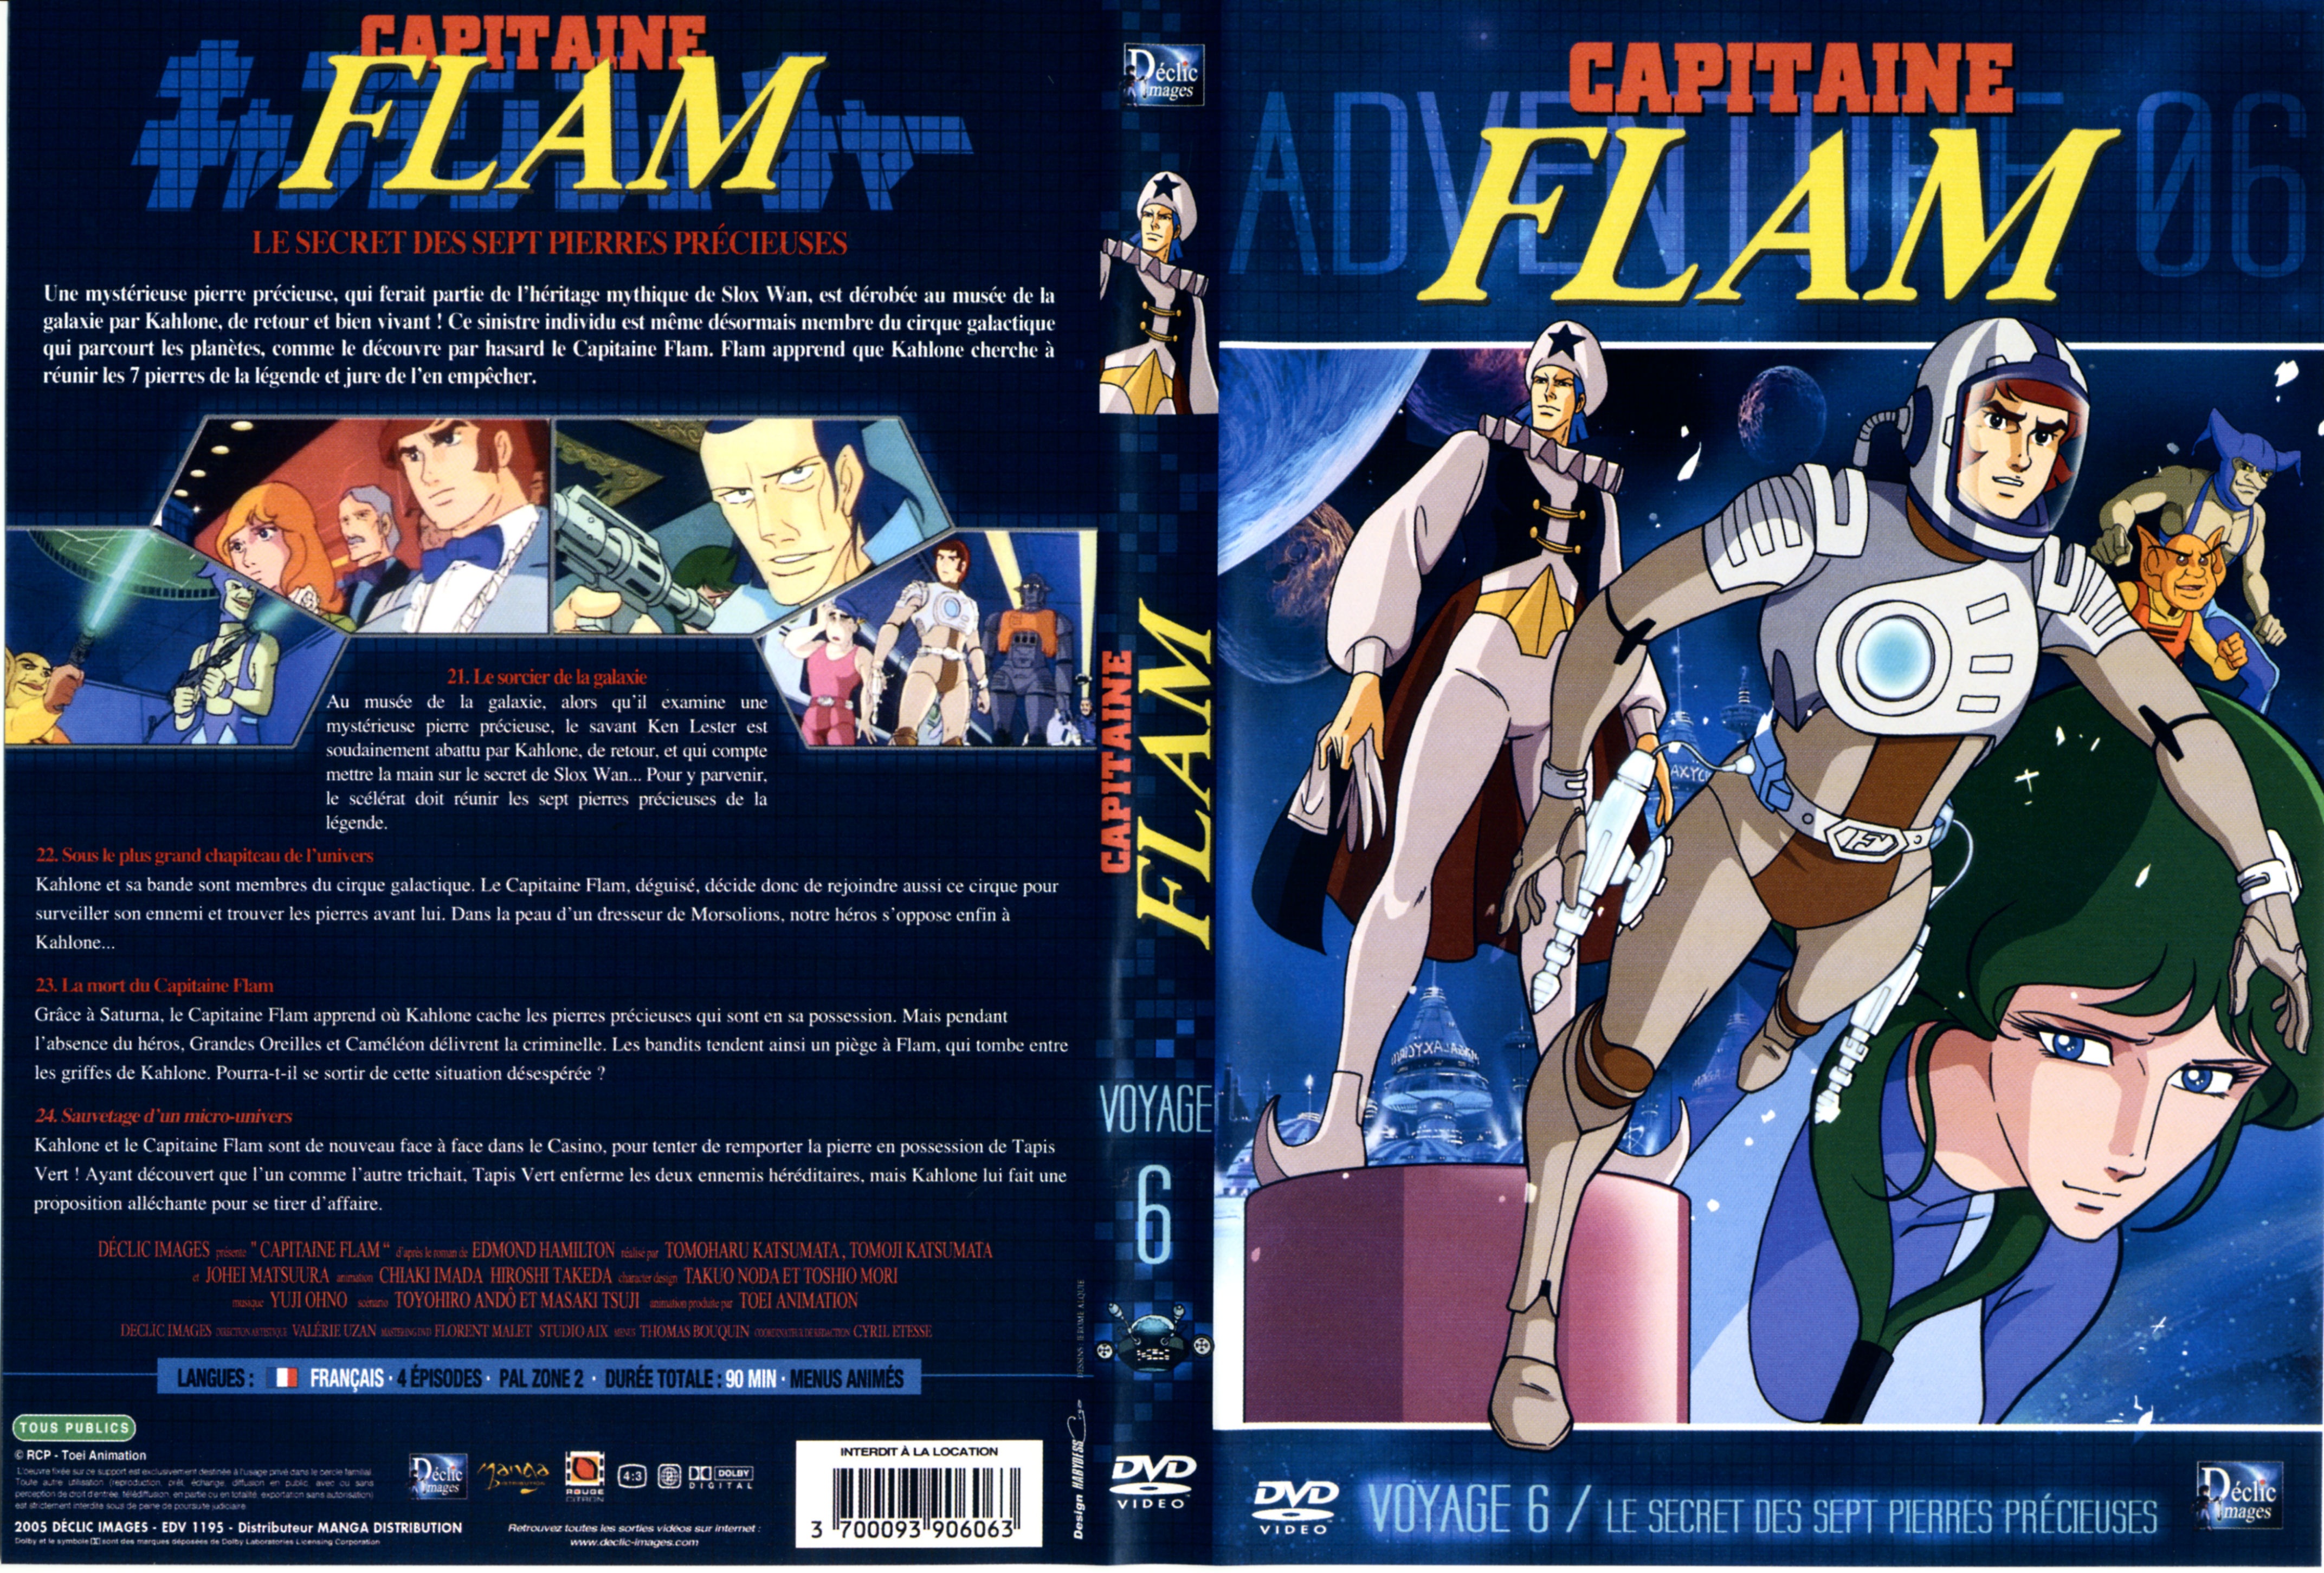 Jaquette DVD Capitaine Flam vol 6 (DECLIC IMAGES)